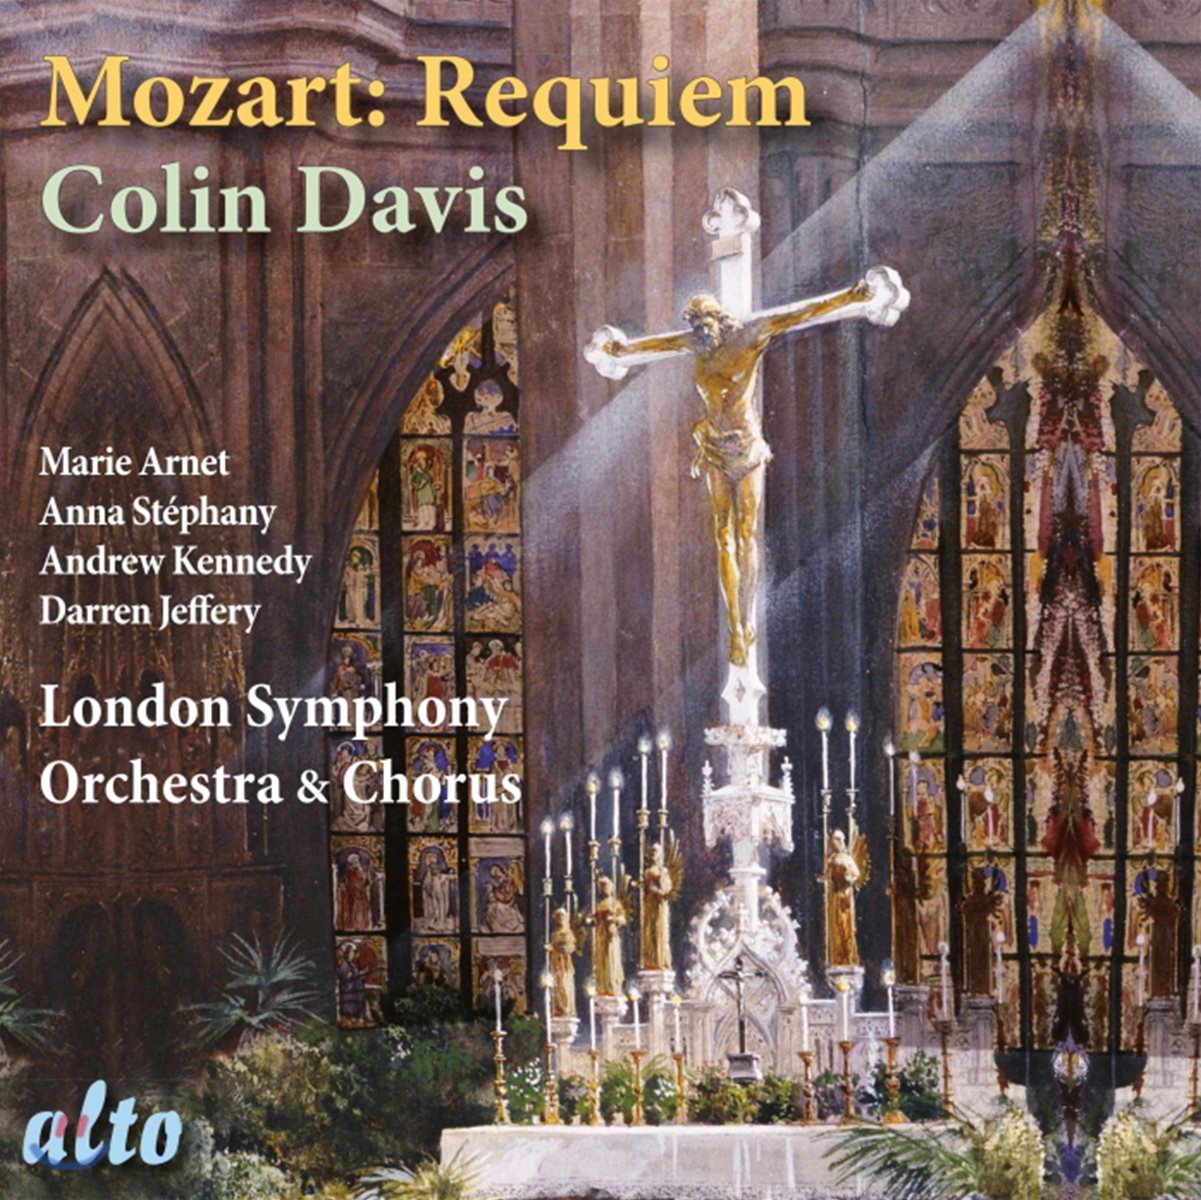 Colin Davis 모차르트: 레퀴엠 (Mozart: Requiem in d minor, K626)